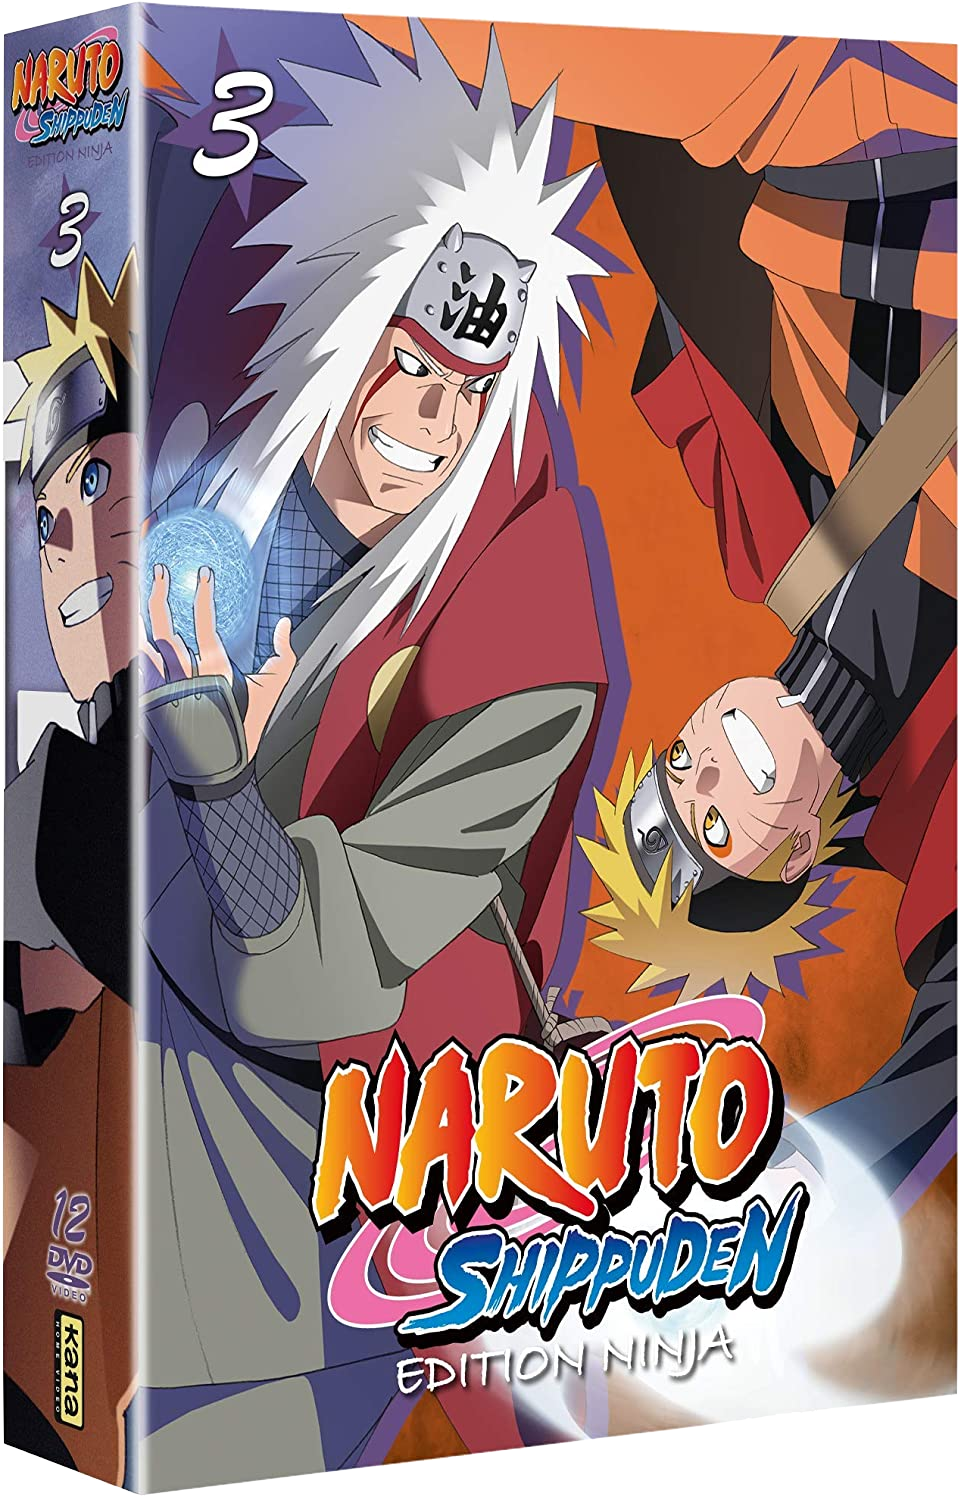 Naruto Shippuden Édition Ninja Coffret 3 [12 DVD]